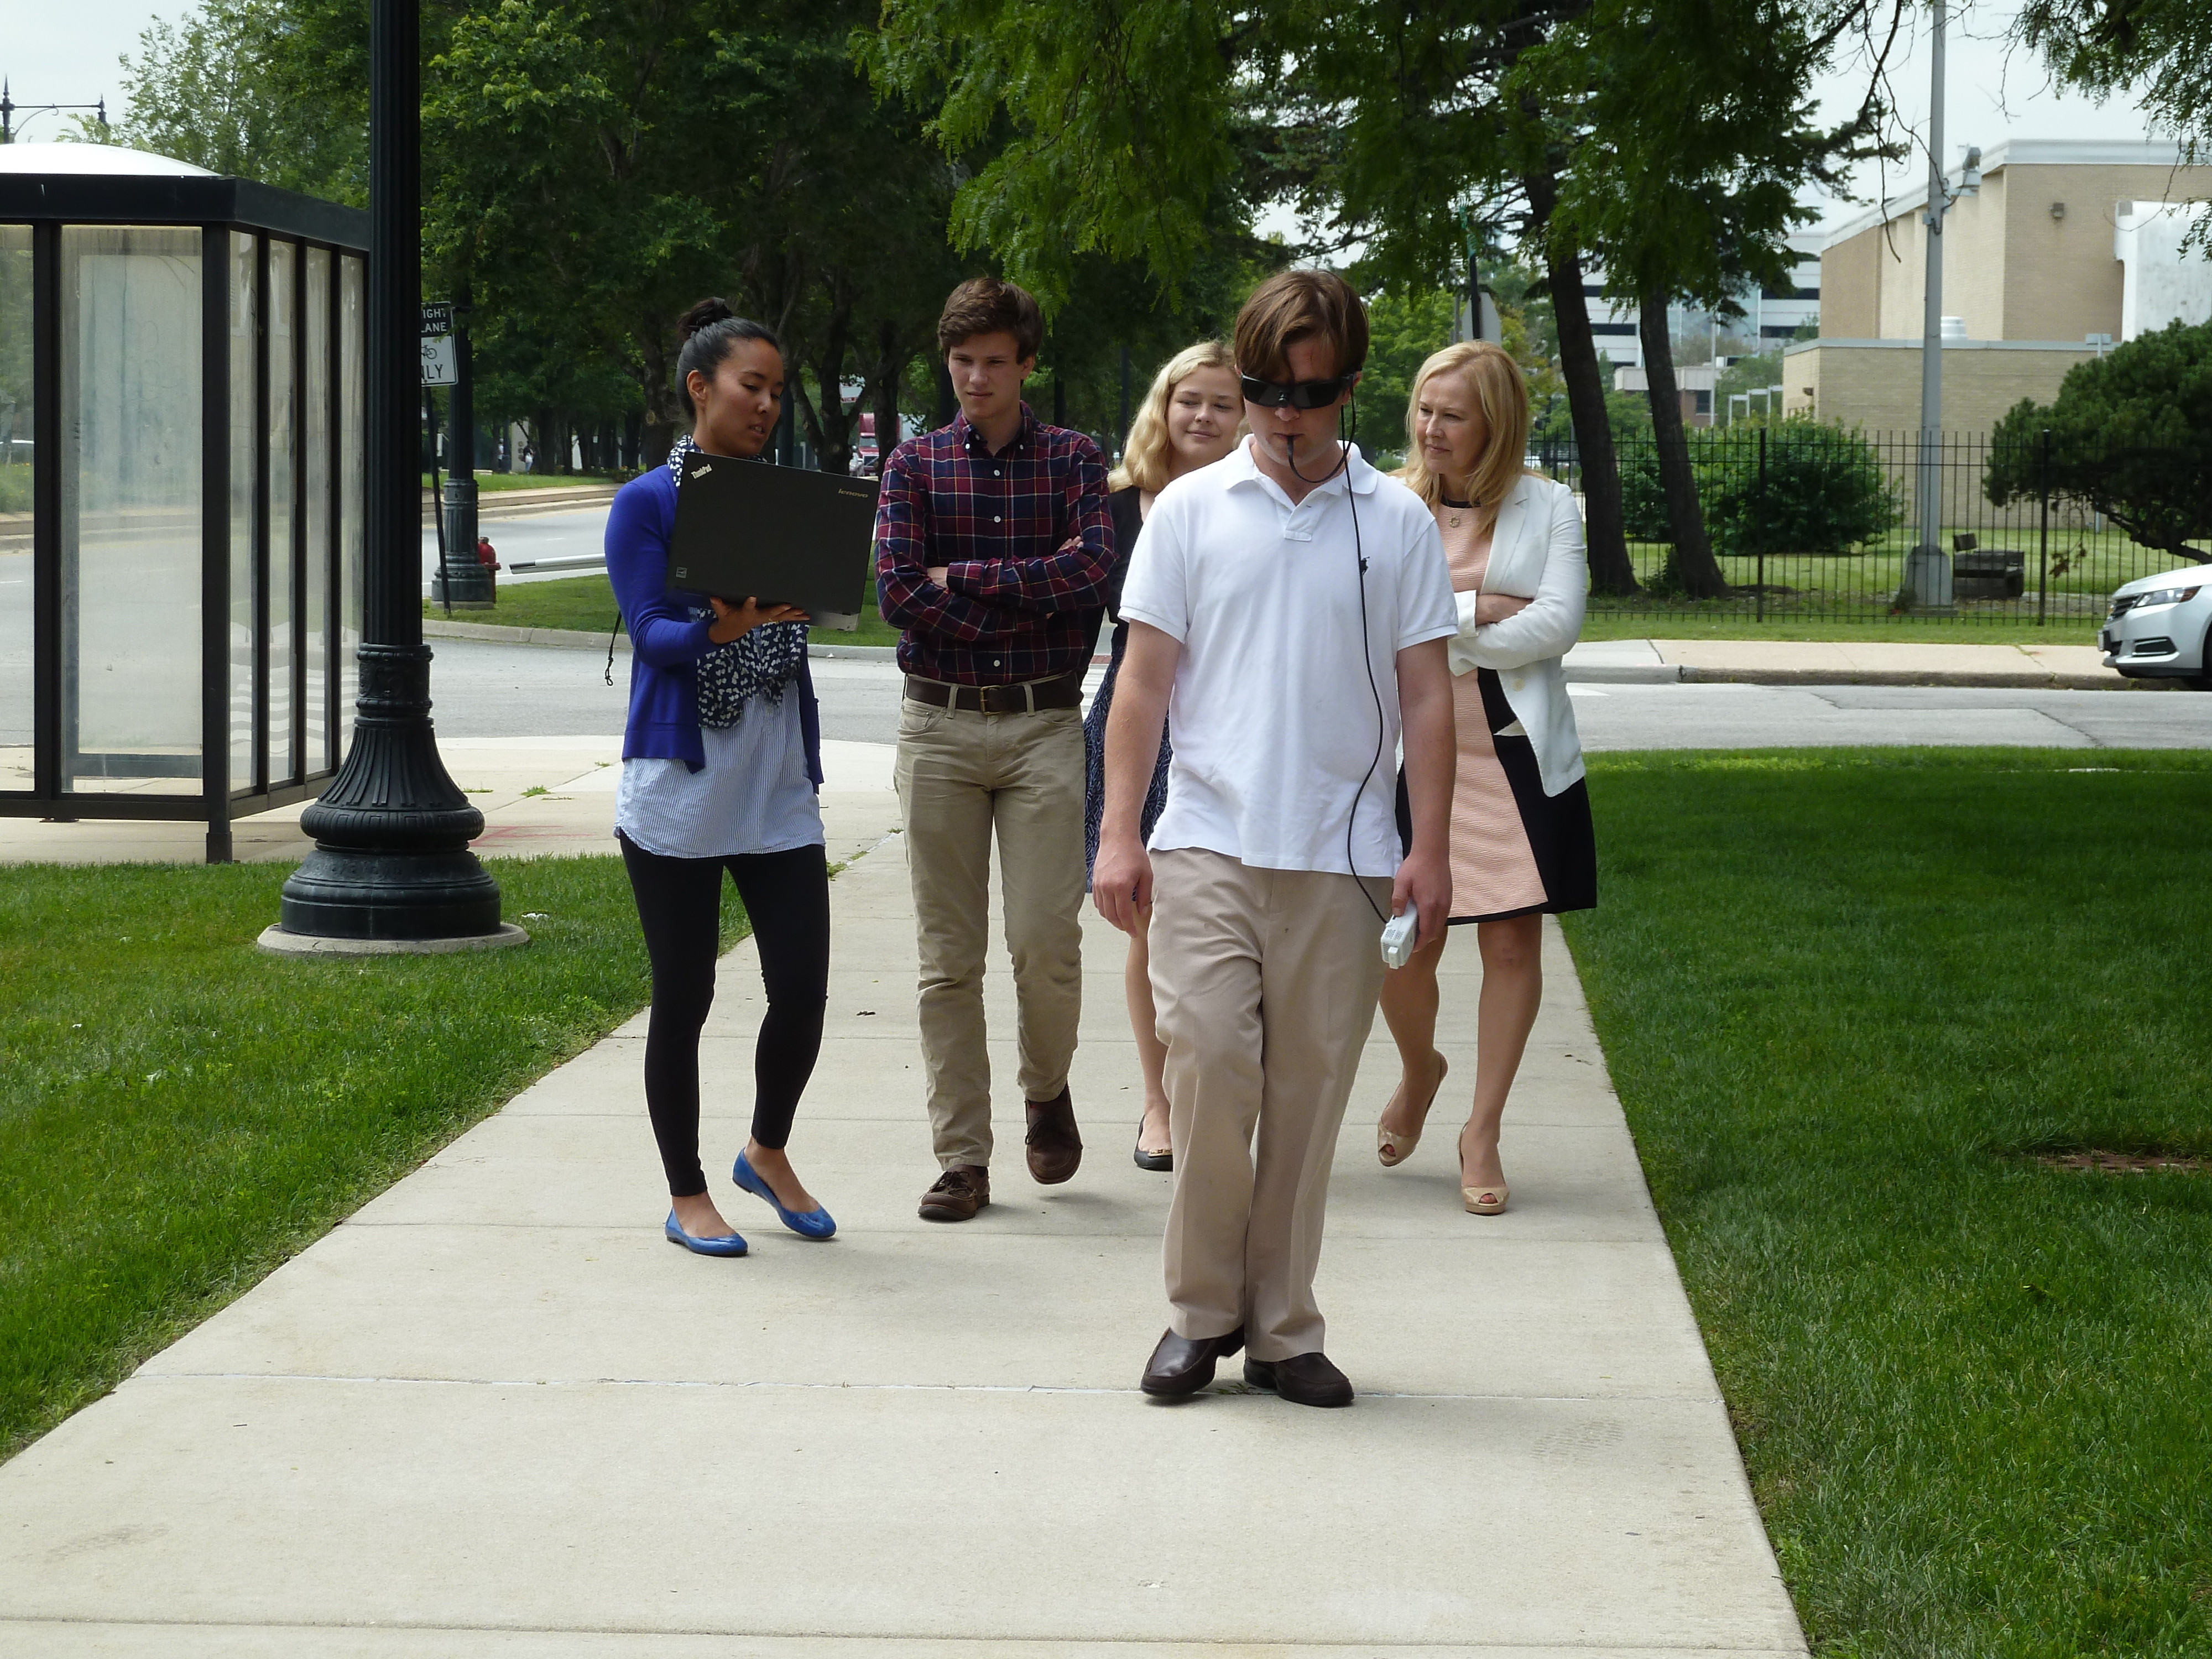 John Vickers demonstrates the BrainPort Device by walking alone on the sidewalk